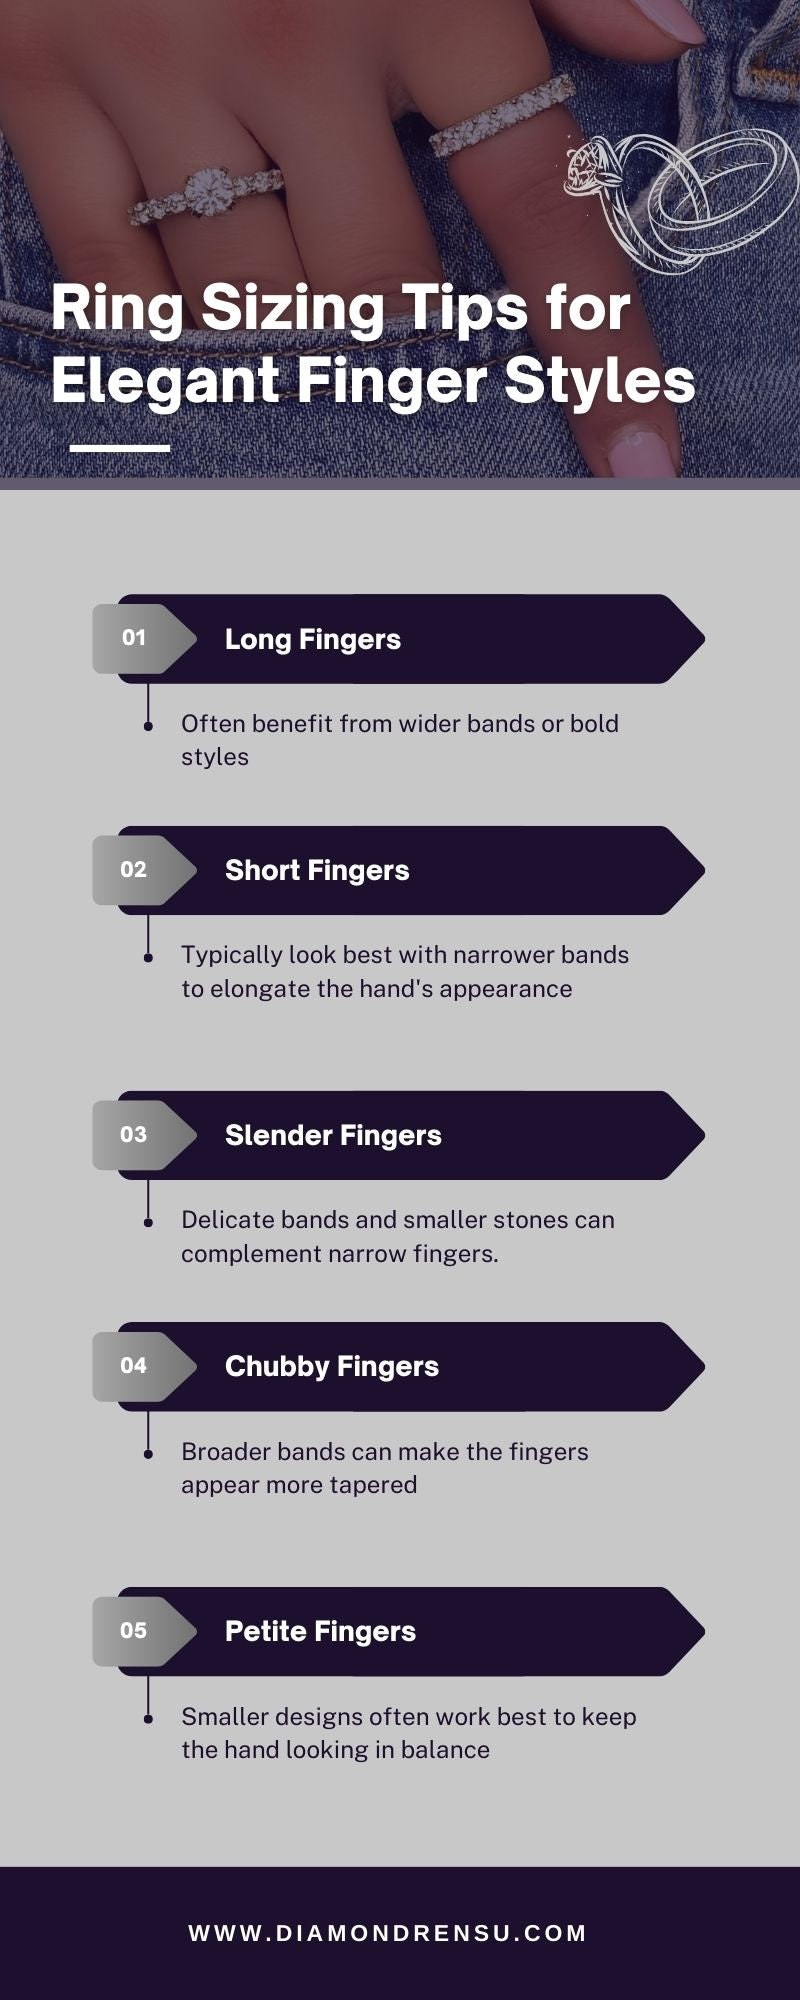 Ring Sizing Tips for Elegant Finger Styles Infographic